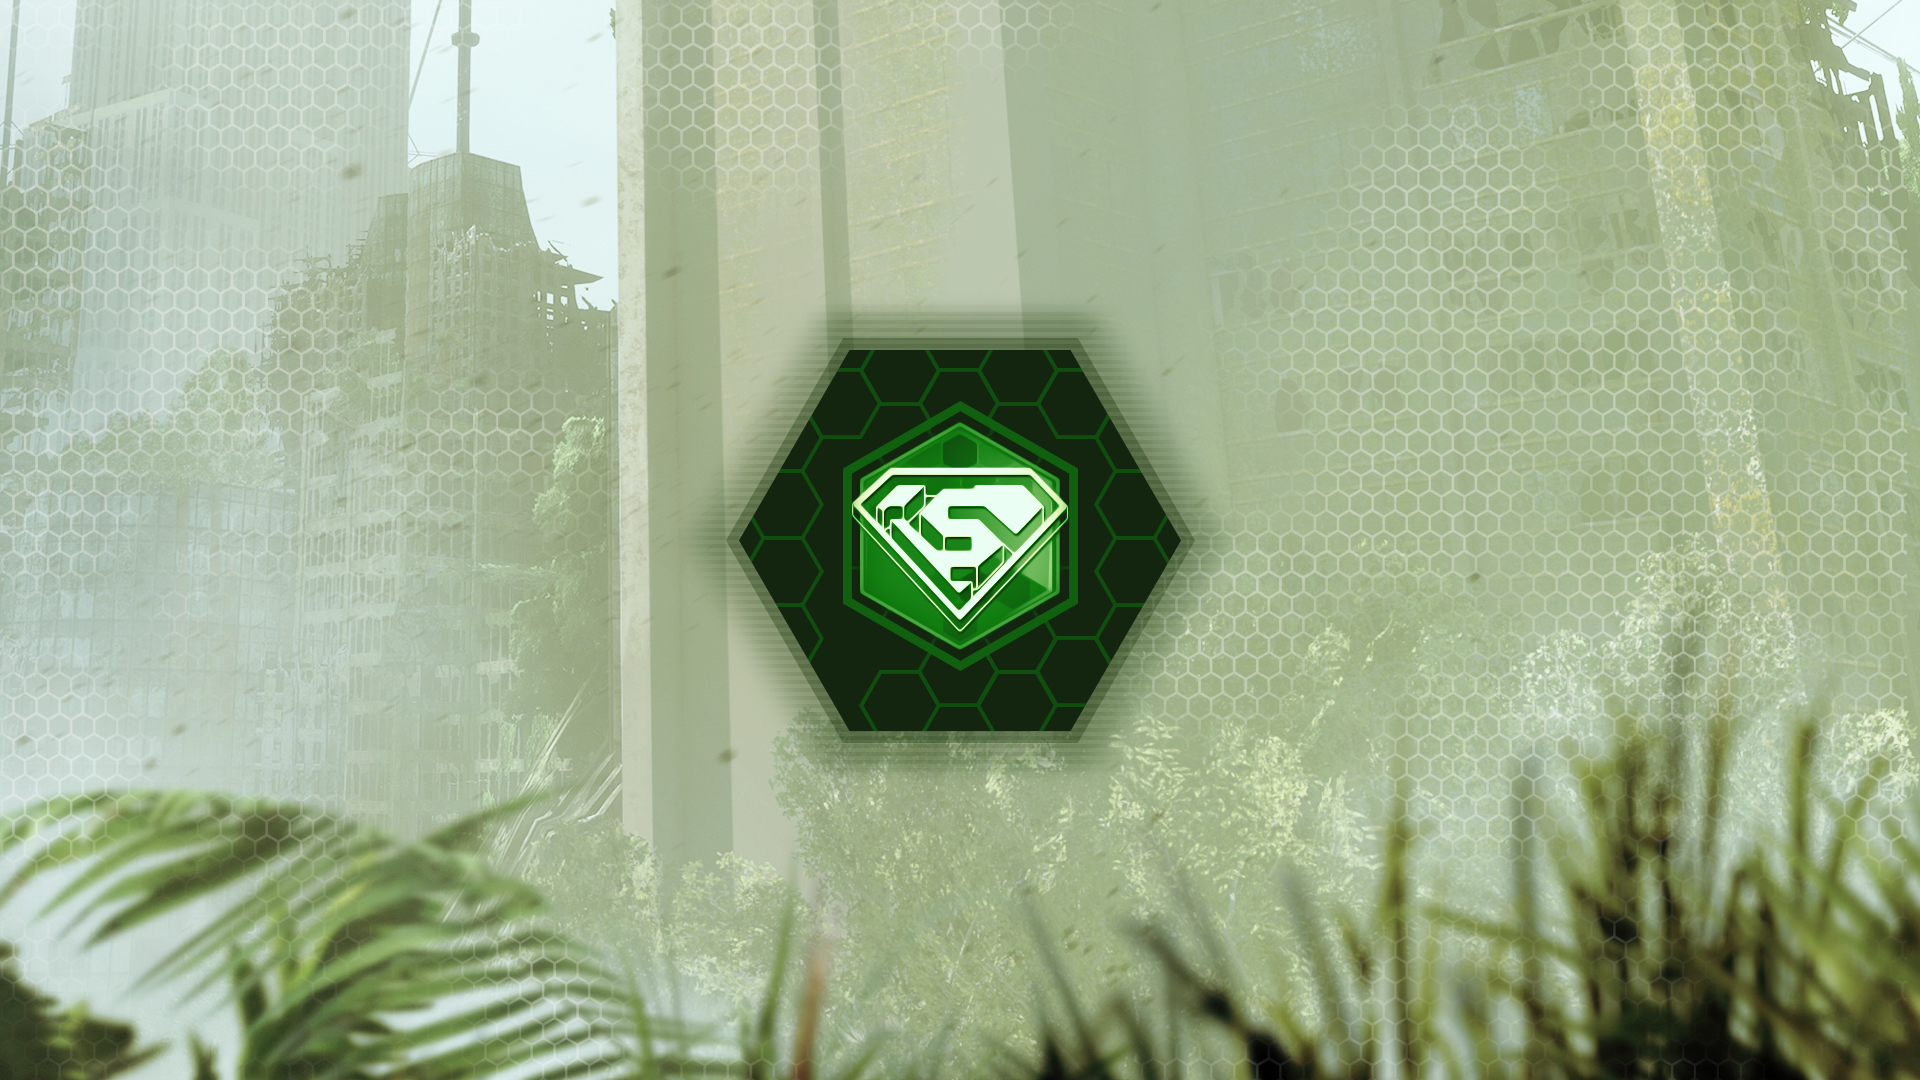 Icon for Professional Superhero